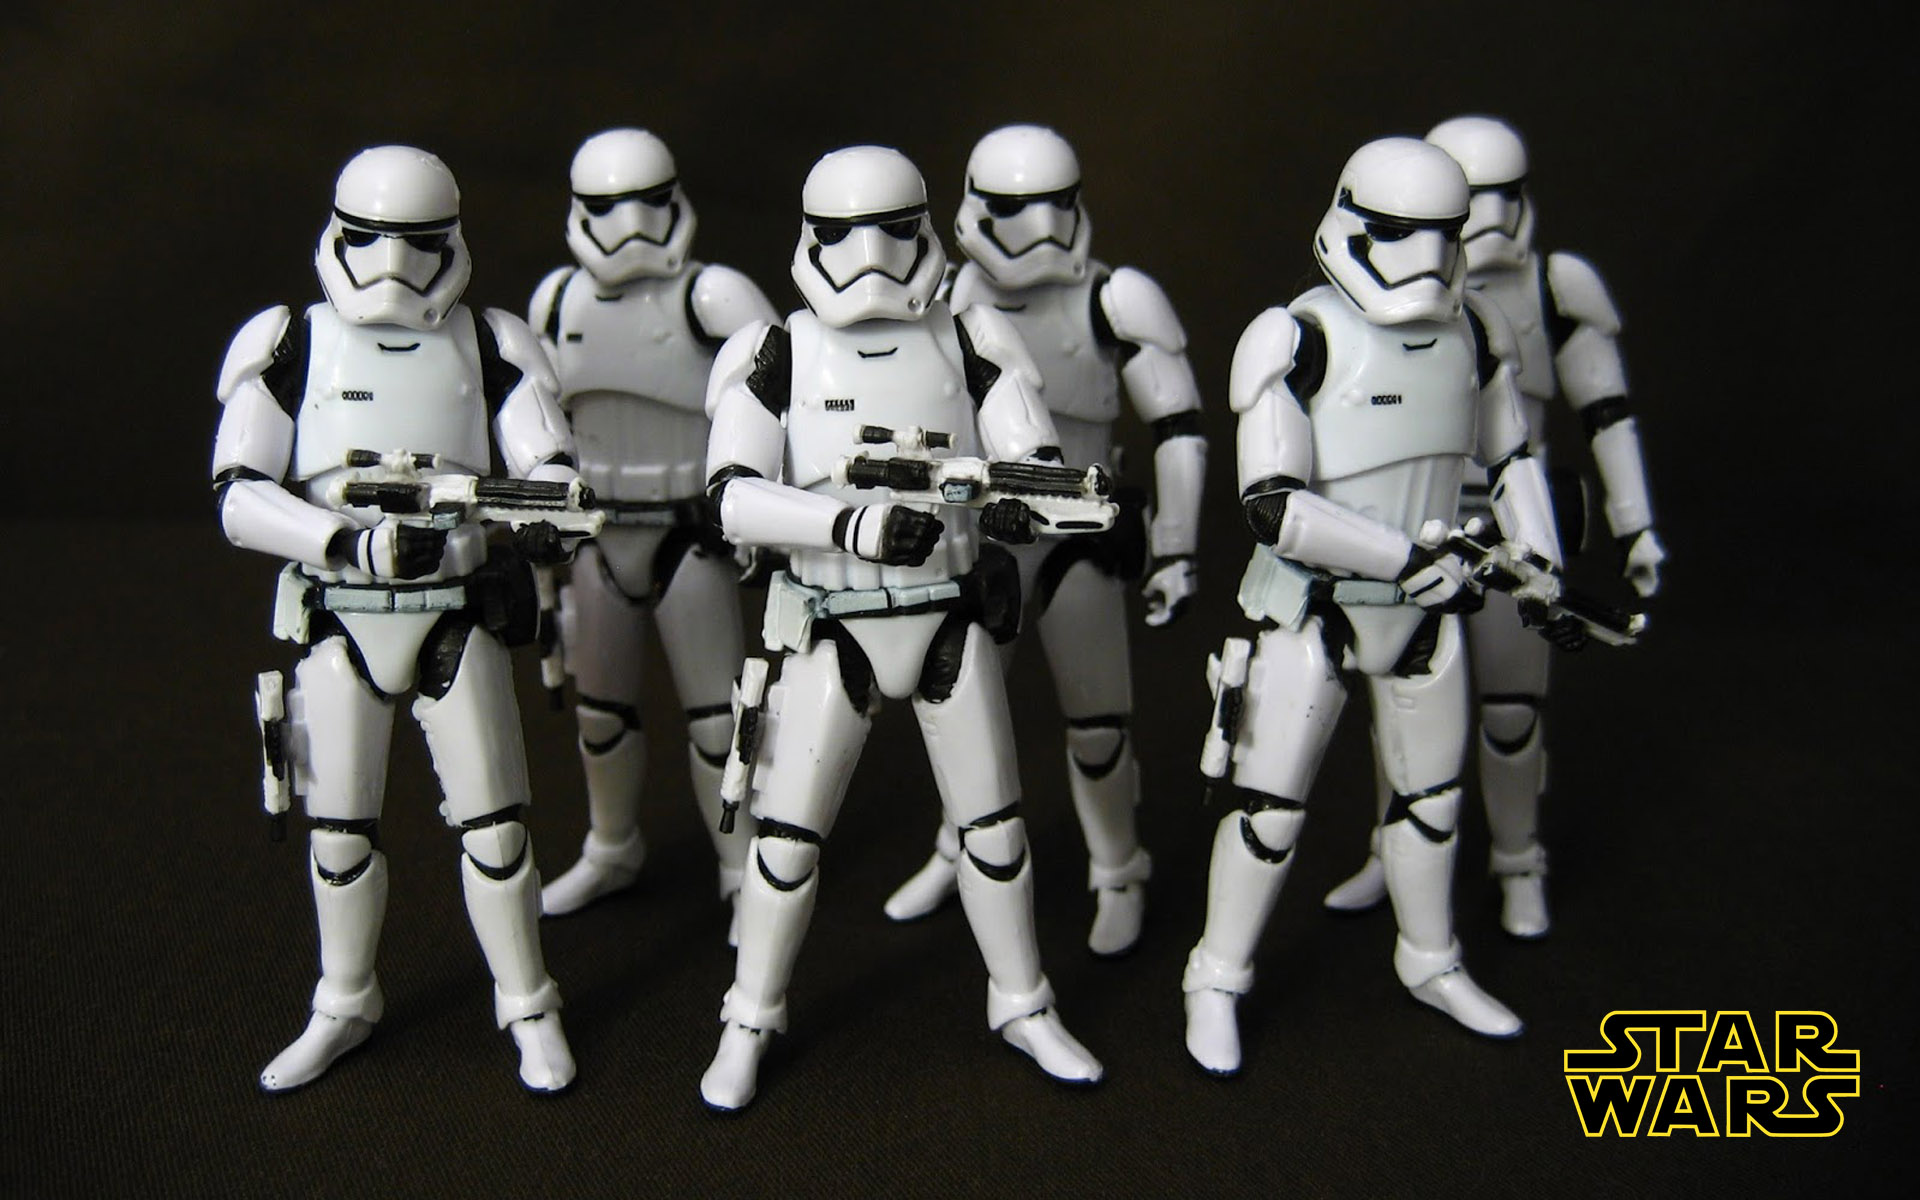 Star Wars First Order Stormtrooper Desktop Wallpaper Hd For Mobile Phones And Laptops ...